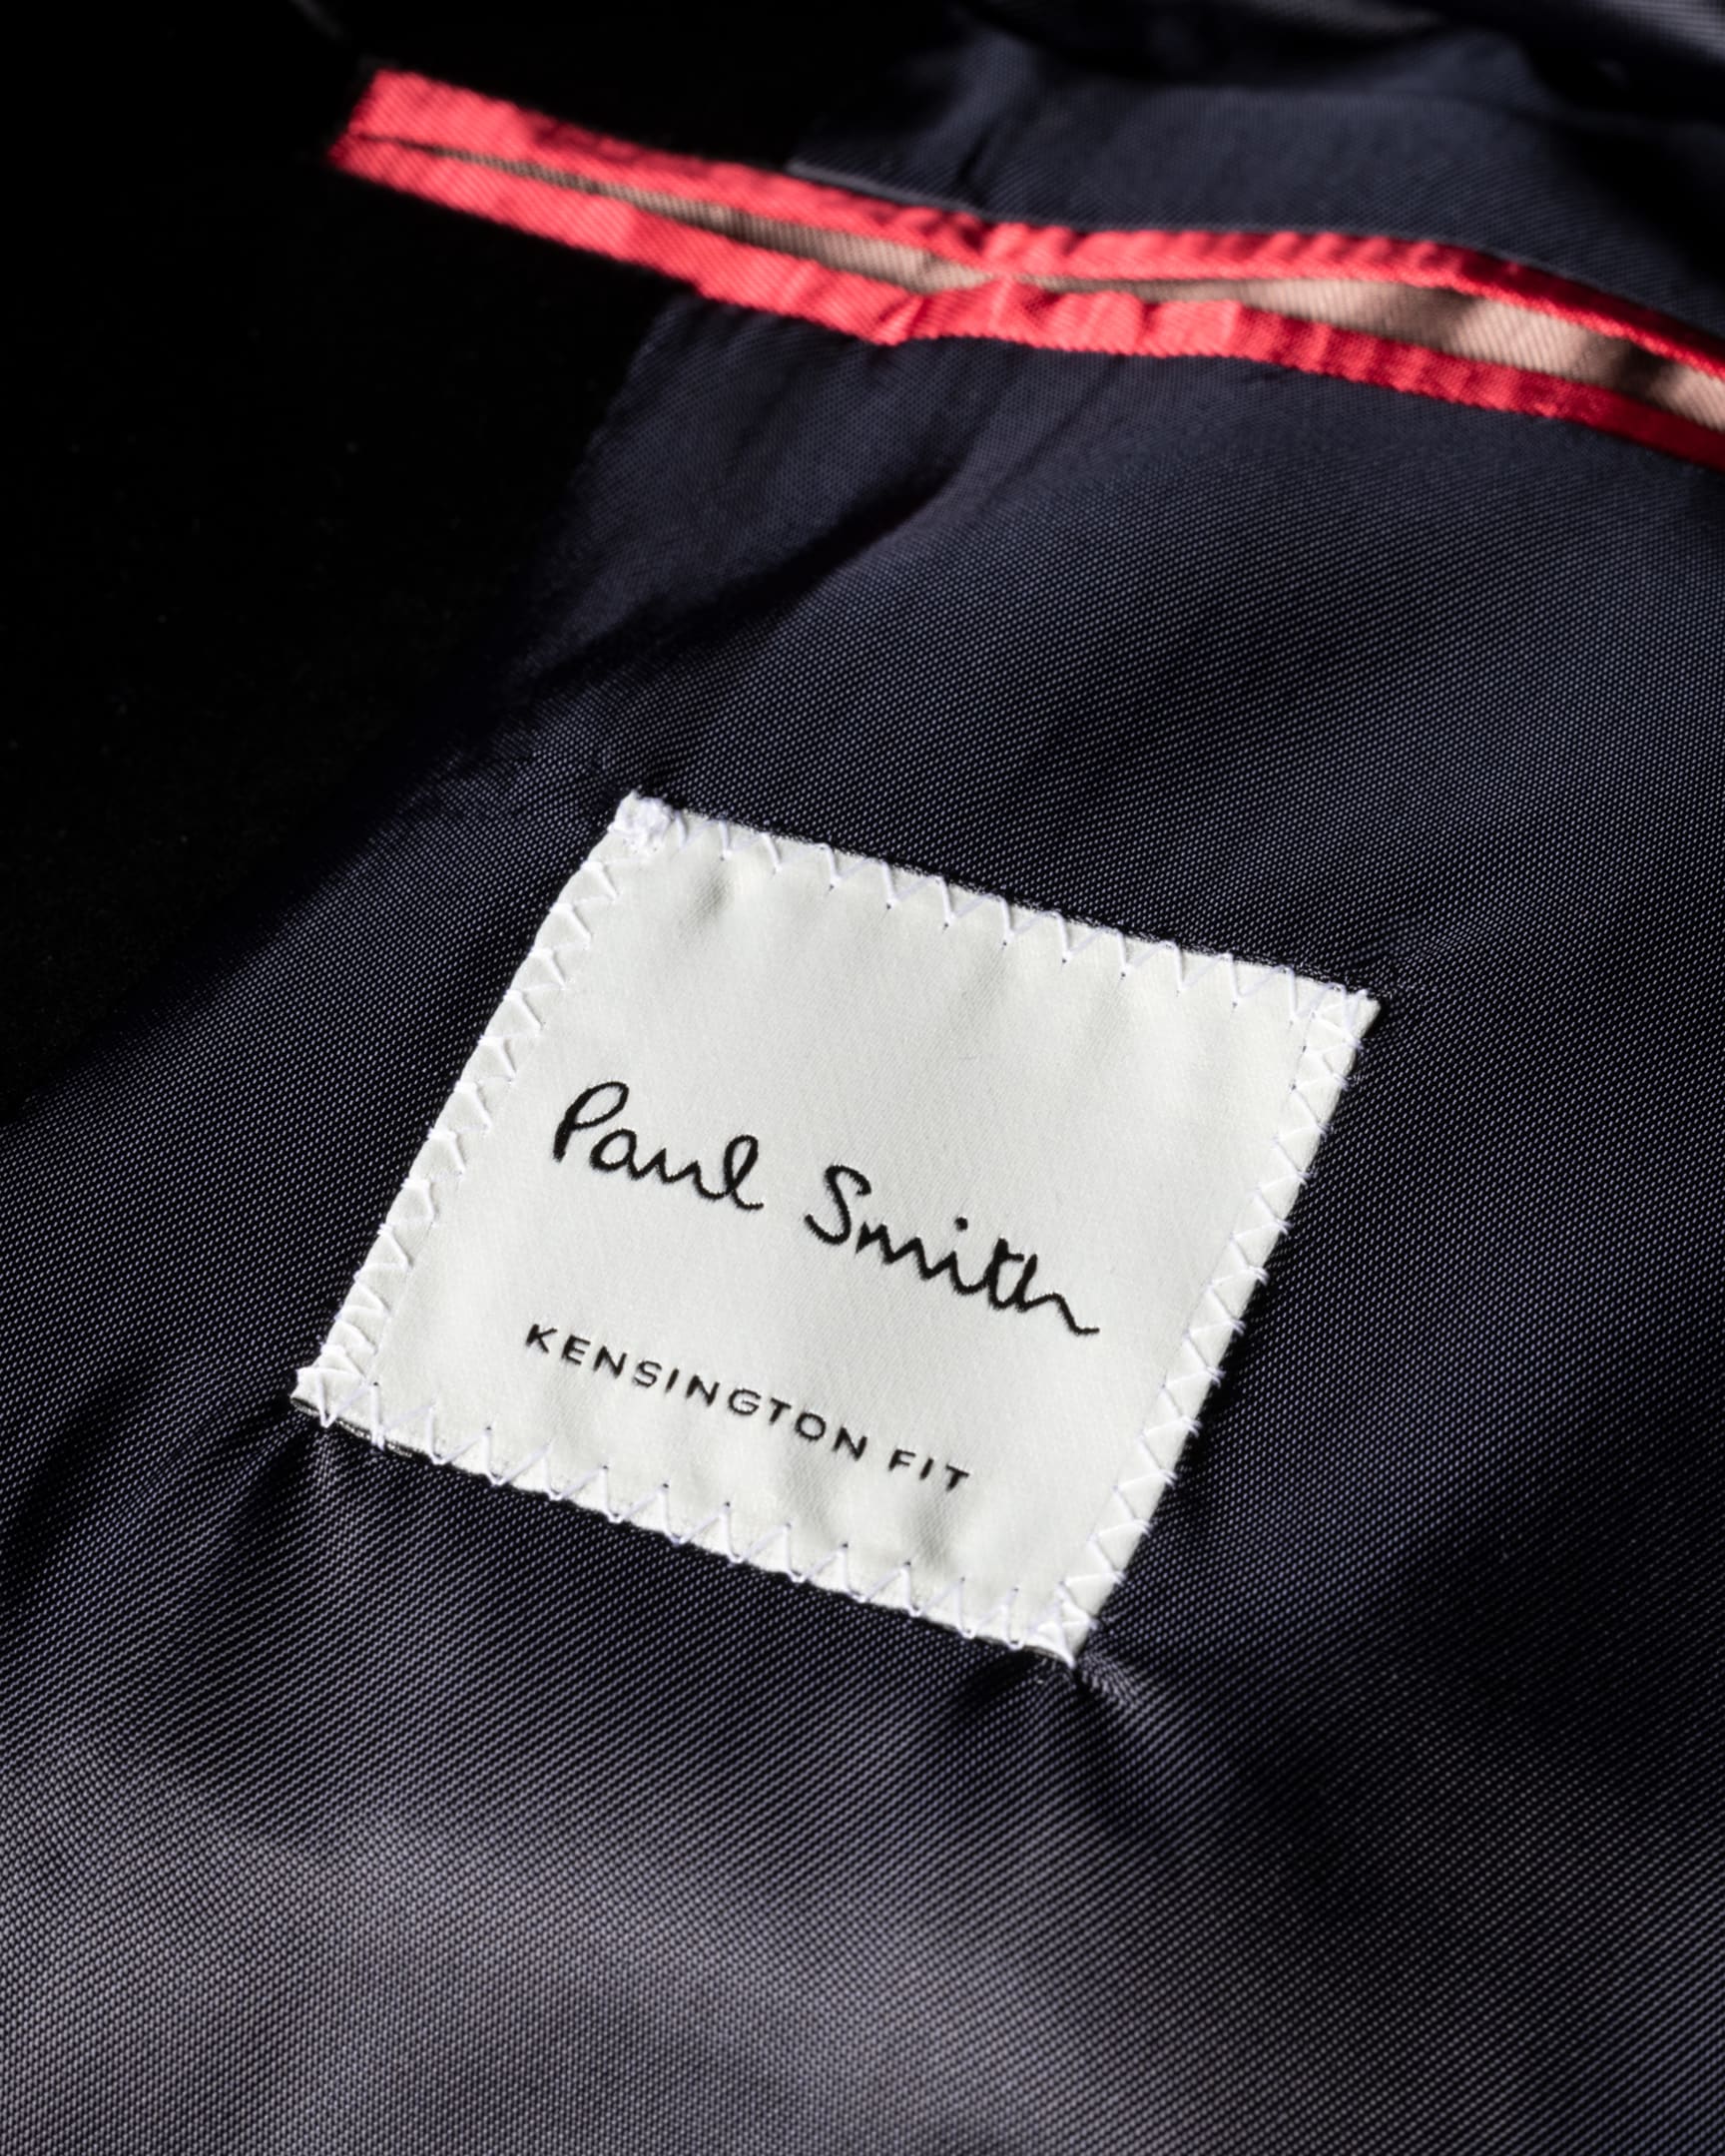 Detail View - The Kensington - Slim-Fit Black Velvet Two-Button Blazer Paul Smith